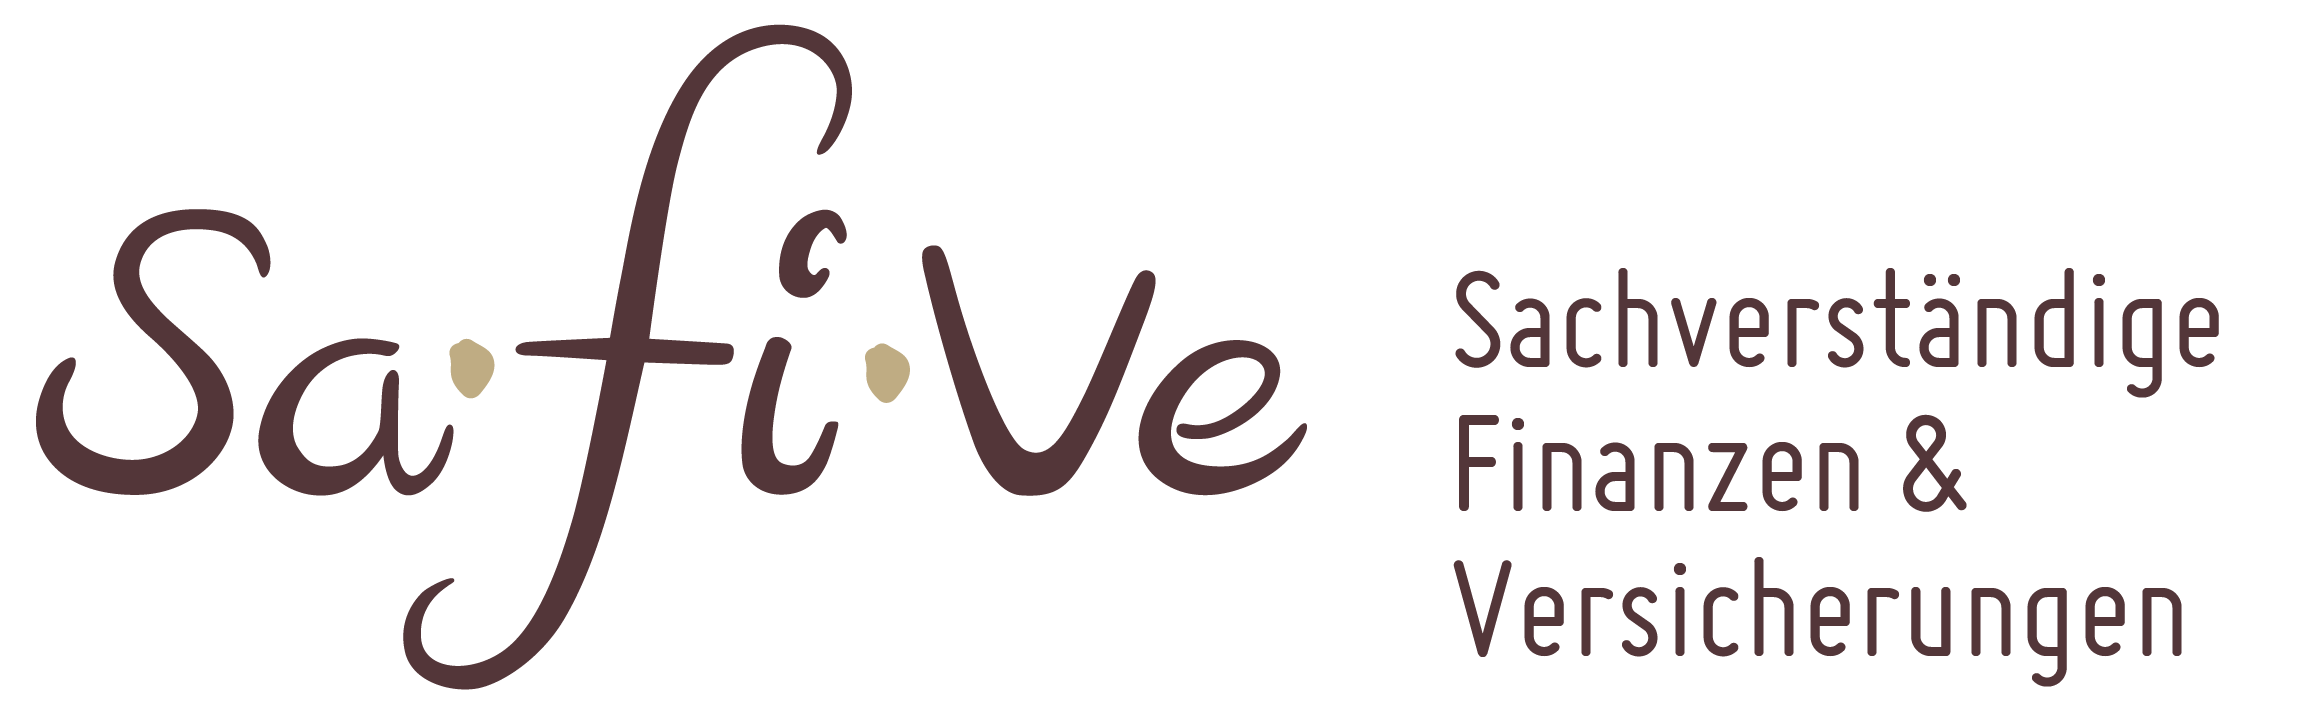 SaFiVe Logo mit Slogan